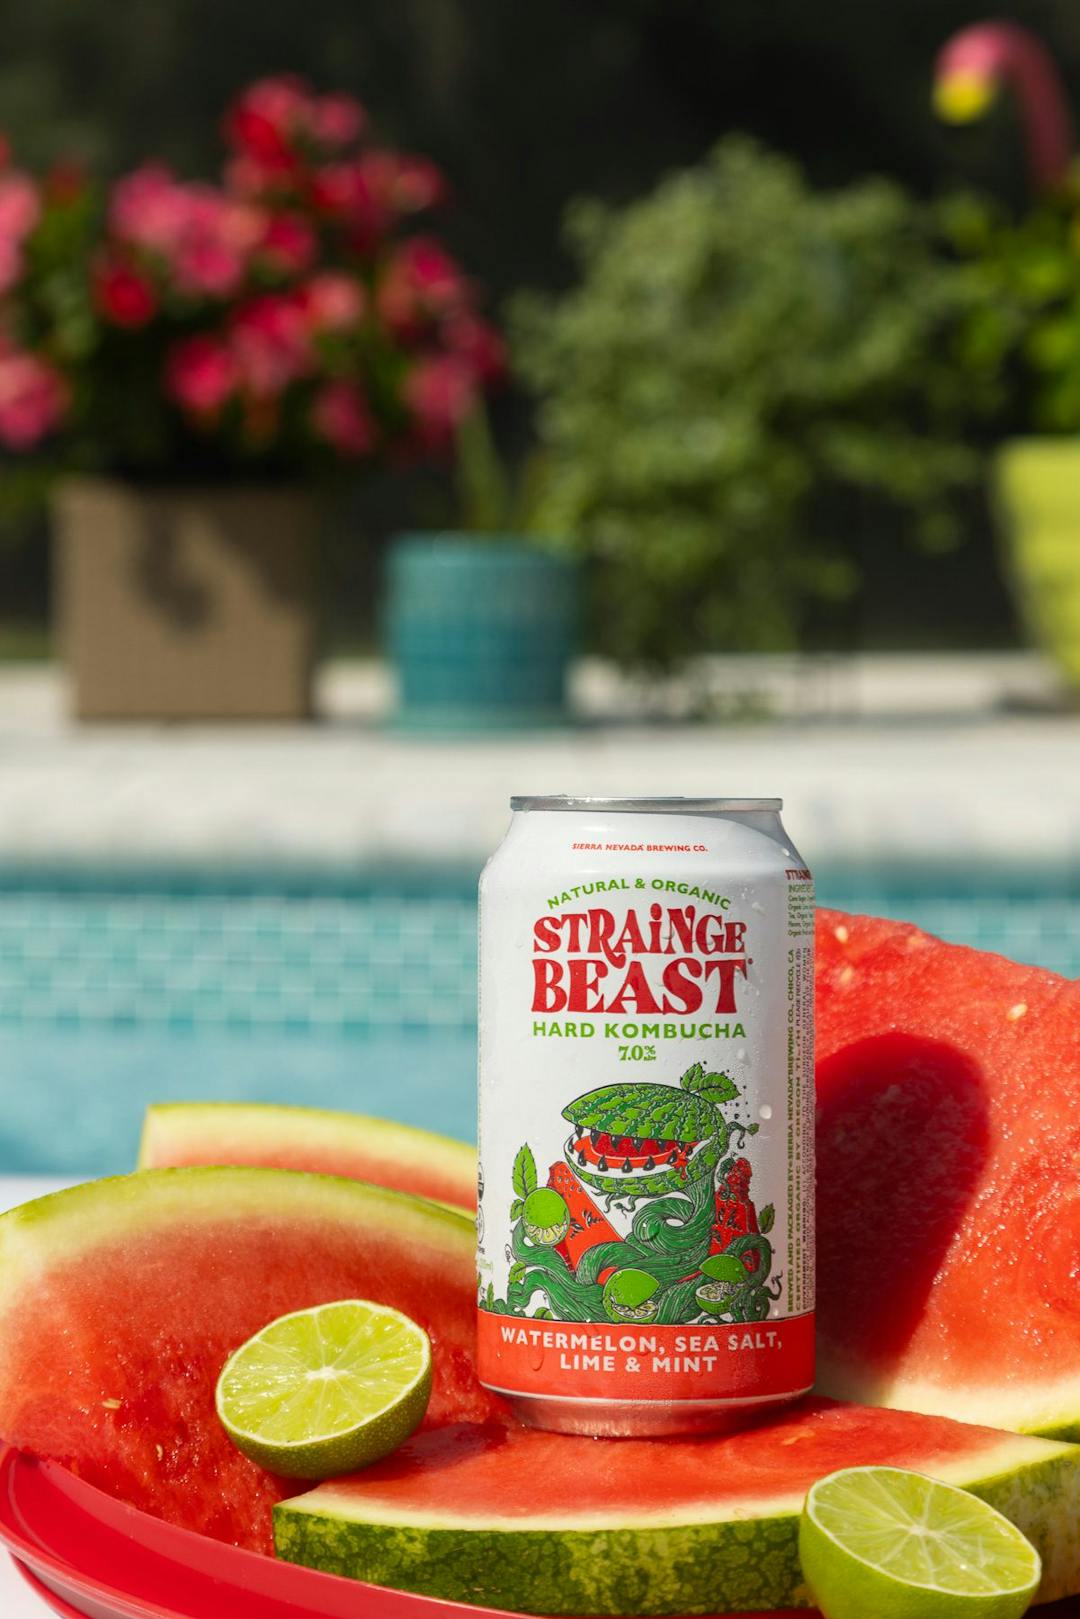 A can of Strainge Beast watermelon hard kombucha against a poolside backdrop